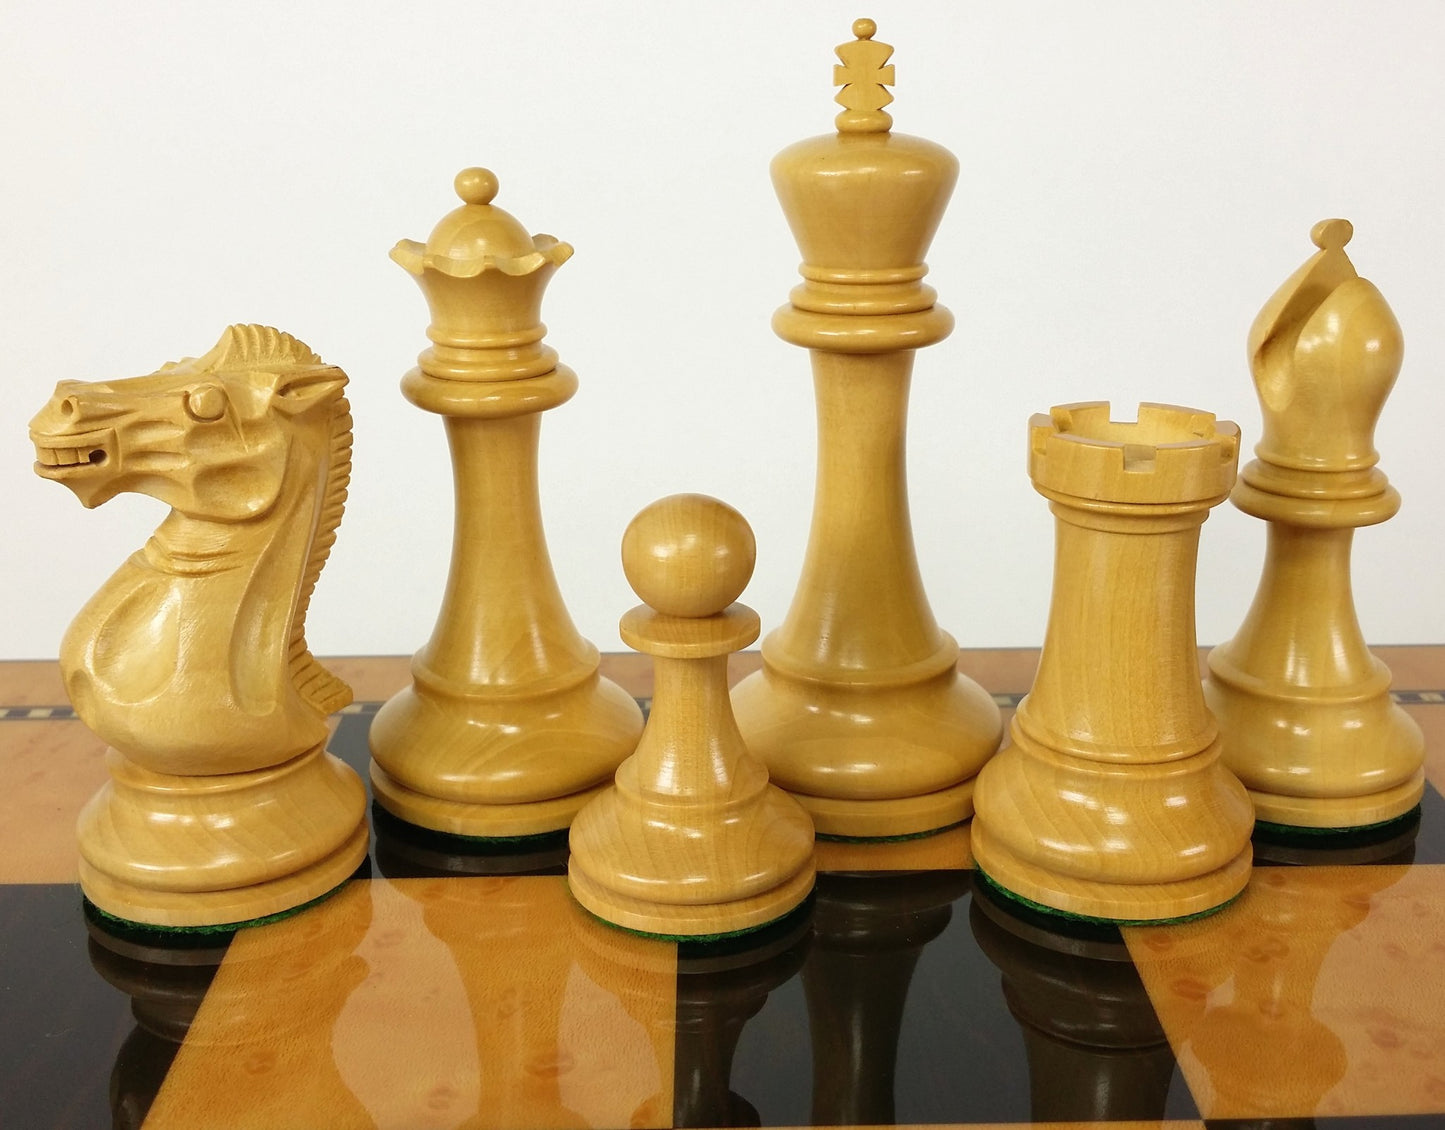 Black & Nat 3 3/4" Anderssen Staunton Wood Chess Set Walnut Color Storage Board